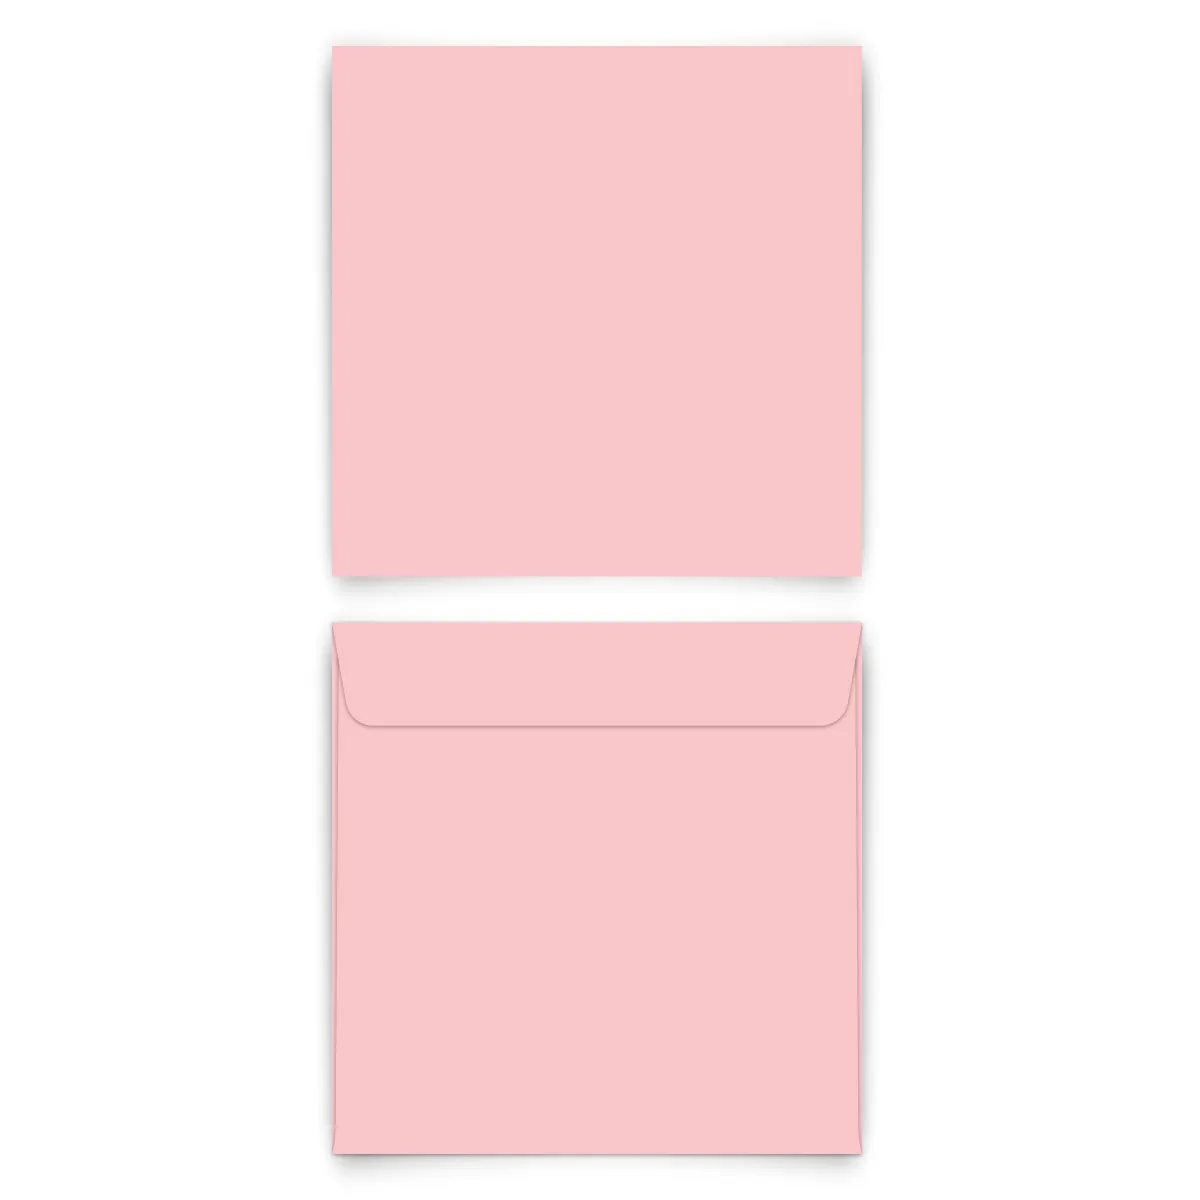 Briefumschläge - Rosa - Quadrat 155 x 155 mm